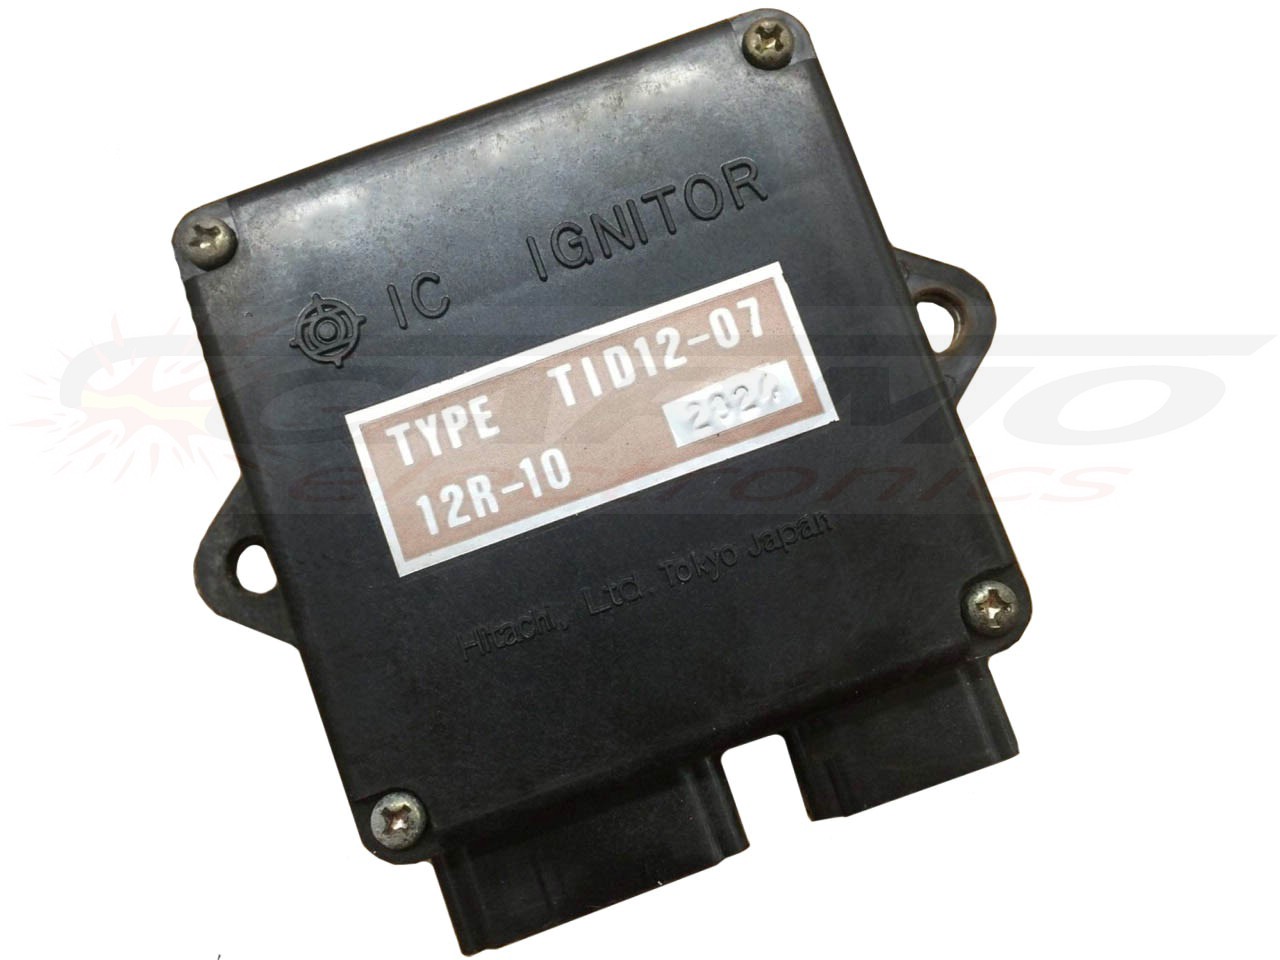 XS400 Maxim Seca igniter ignition module CDI TCI Box (TID12-07, 12R-10)